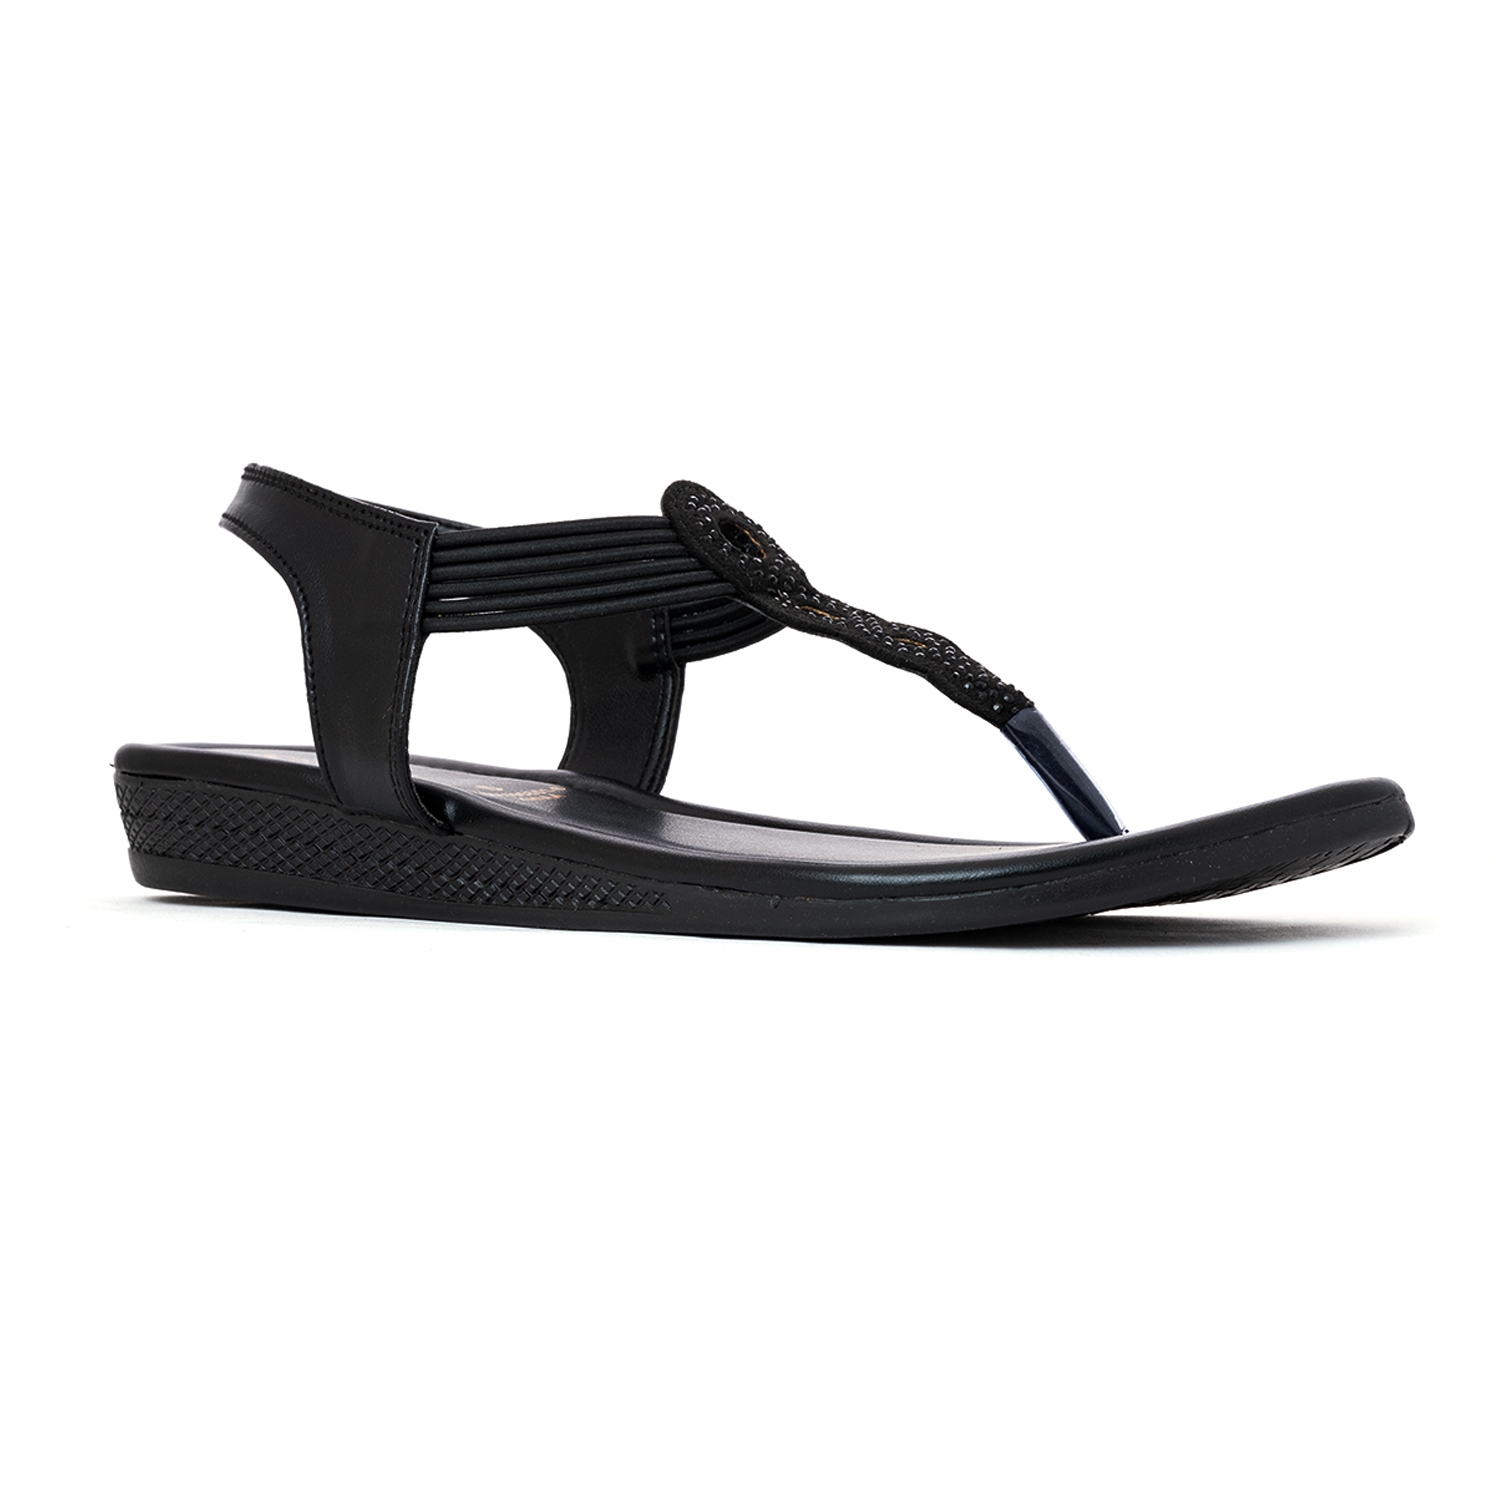 Khadim | Khadim's Synthetic PVC Sole Decorative Black Sandal For Women